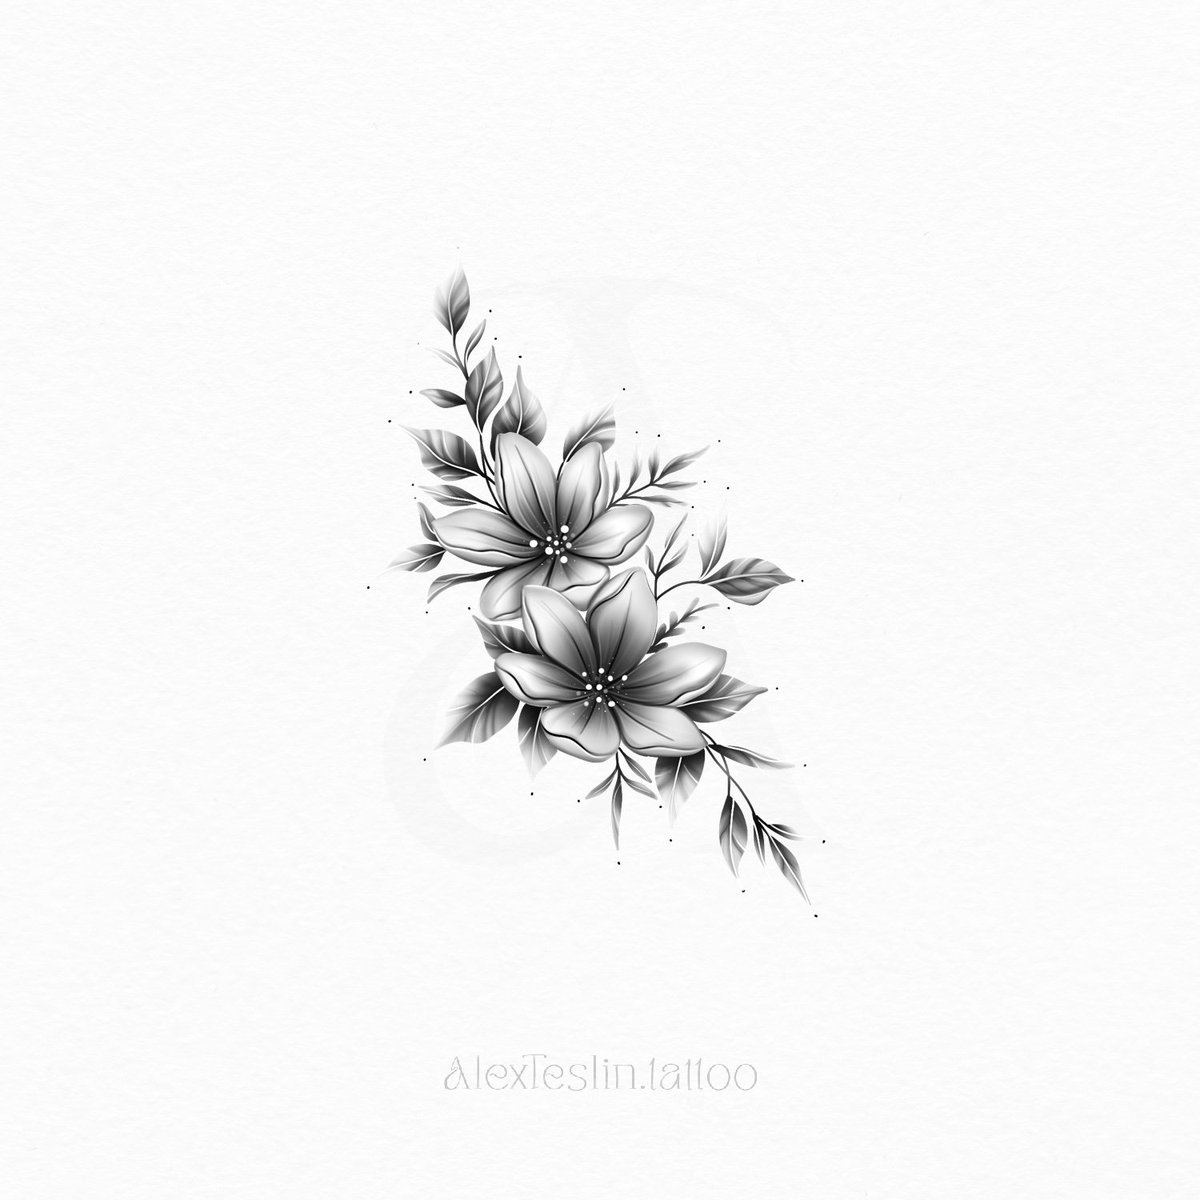 🌸🖤

#alexteslintattoo #tattoodesign #flowertattoo #tattooidea #flowerdesign #minimalistictattoo #minimalisticdesign